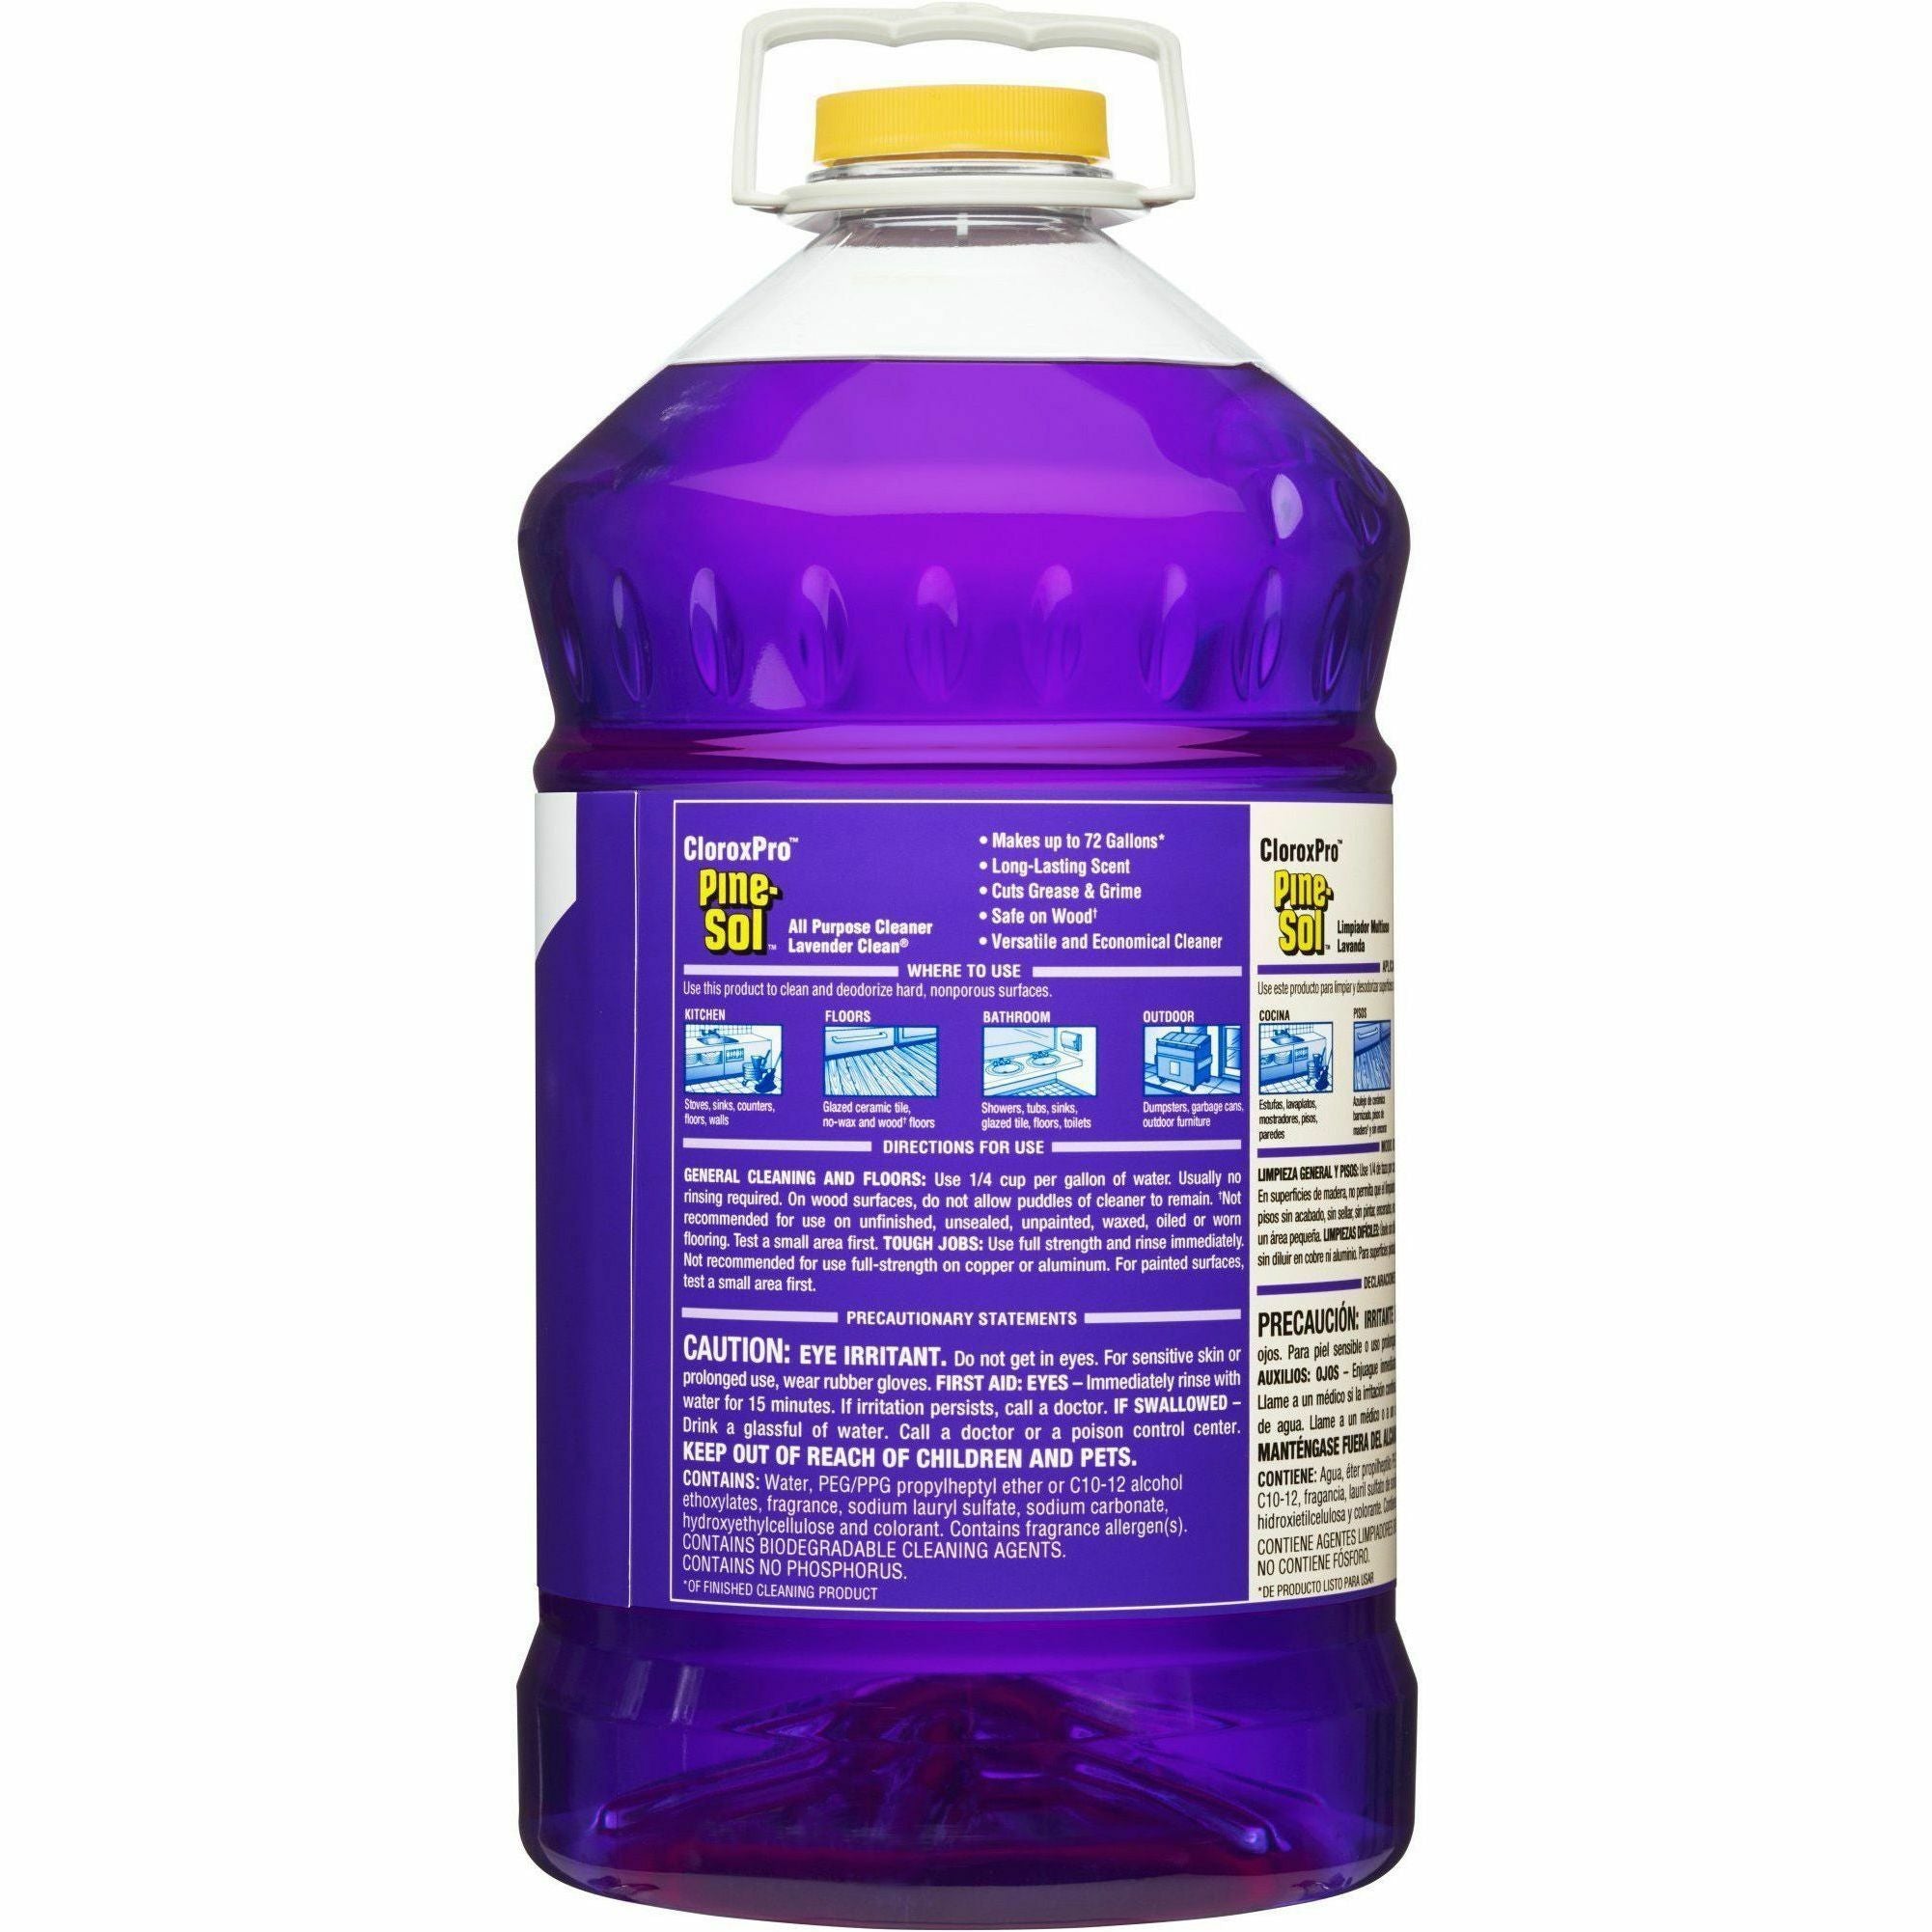 CloroxPro Pine-Sol All Purpose Cleaner - Concentrate - 144 fl oz (4.5 quart) - Lavender Clean Scent - 63 / Bundle - Water Soluble, Deodorize, Antibacterial - Purple - 2